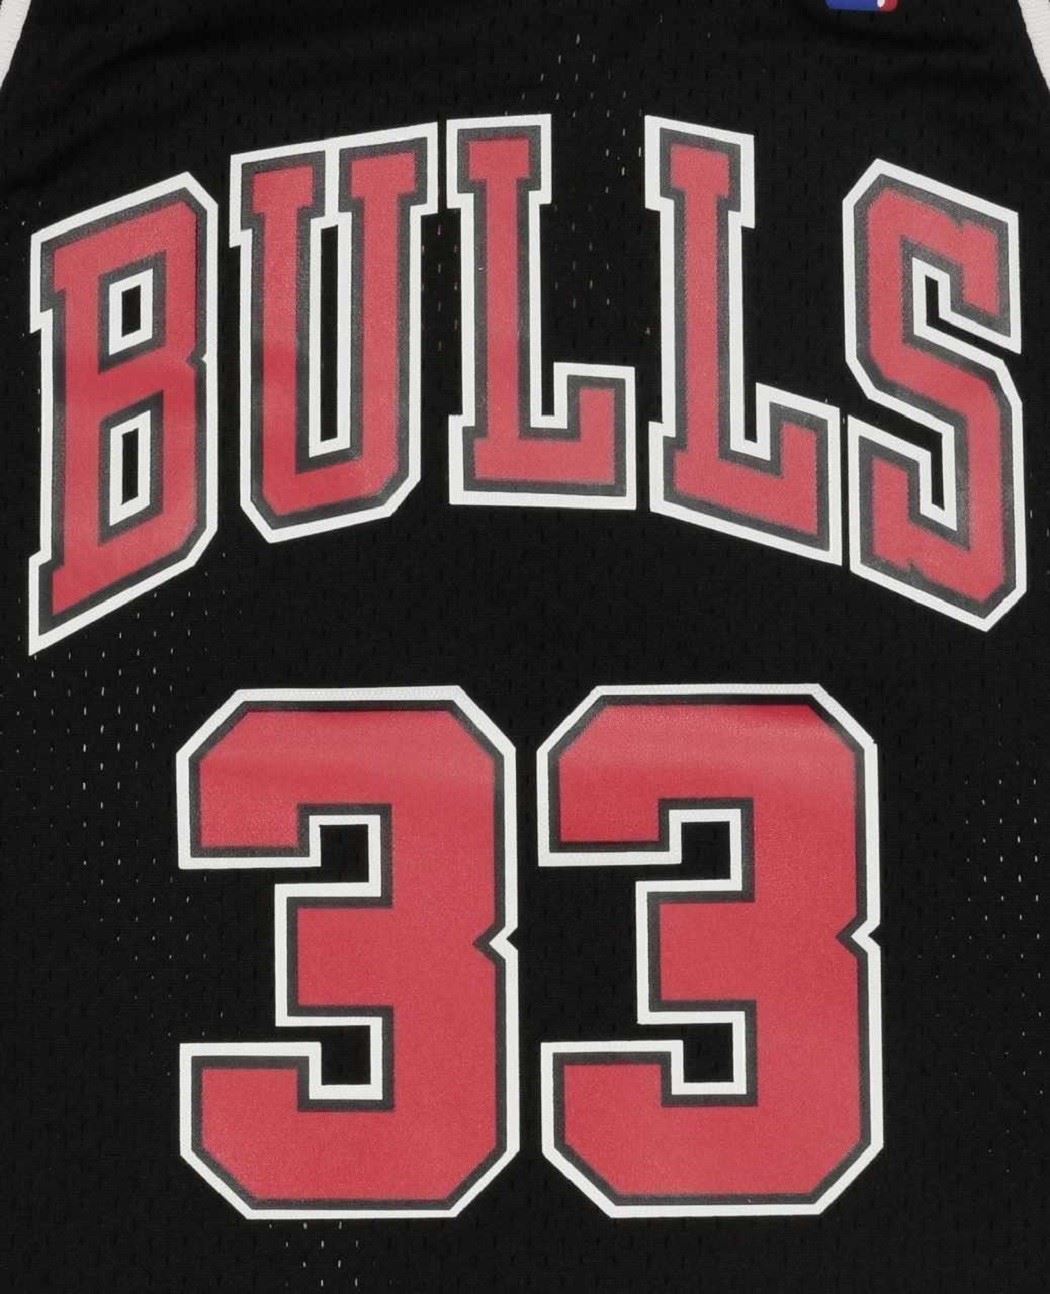 Scottie Pippen #33 Chicago Bulls NBA Kids Swingman Alternate Jersey Mitchell & Ness